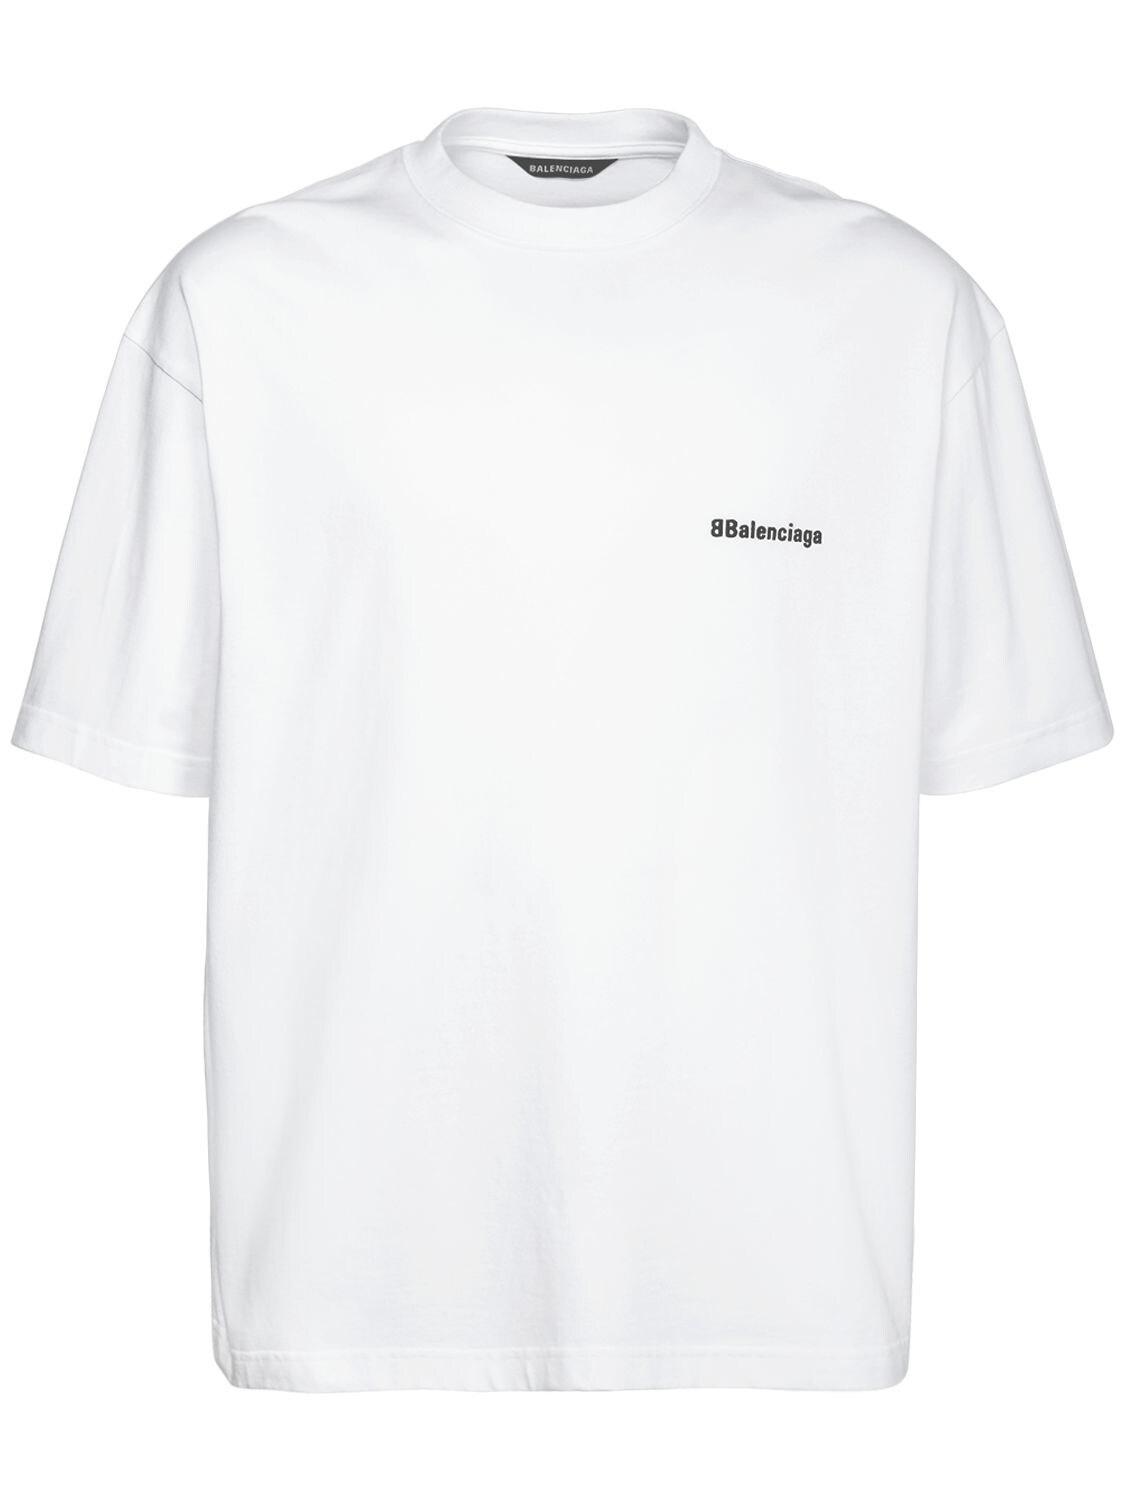 Balenciaga Logo Embroidery Cotton T-shirt in White for Men - Lyst